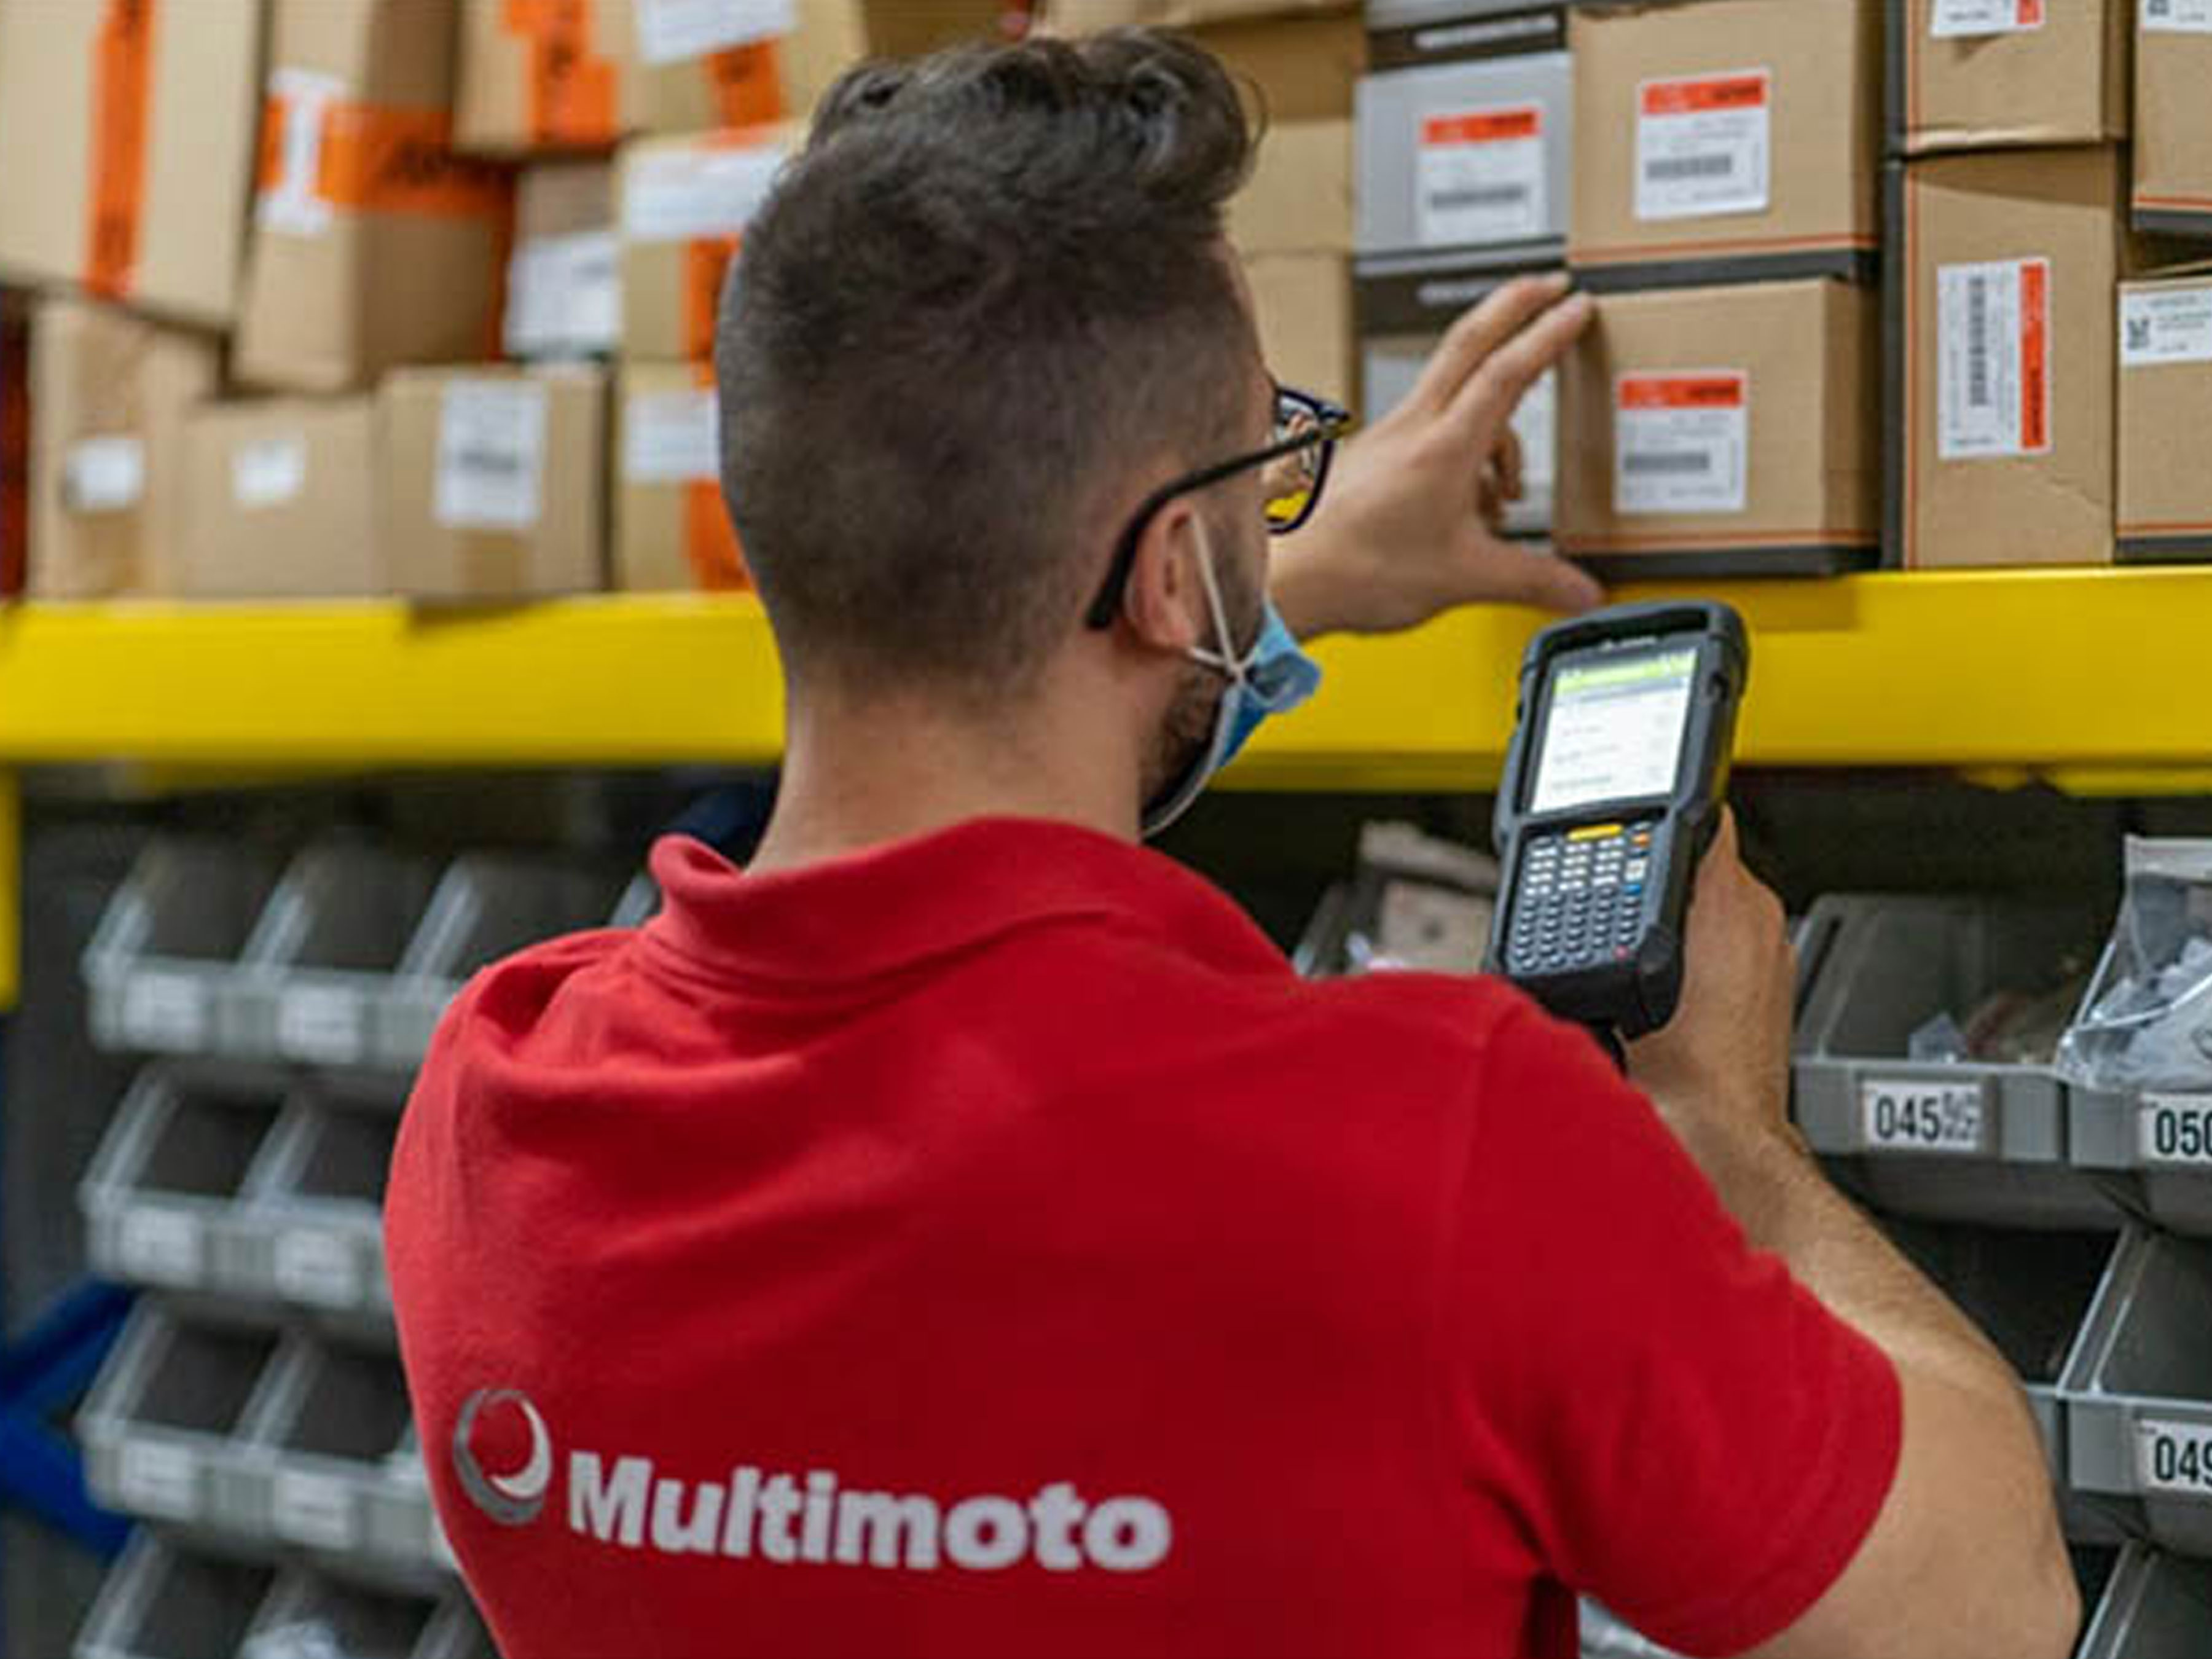 Multimoto employee scanning a box